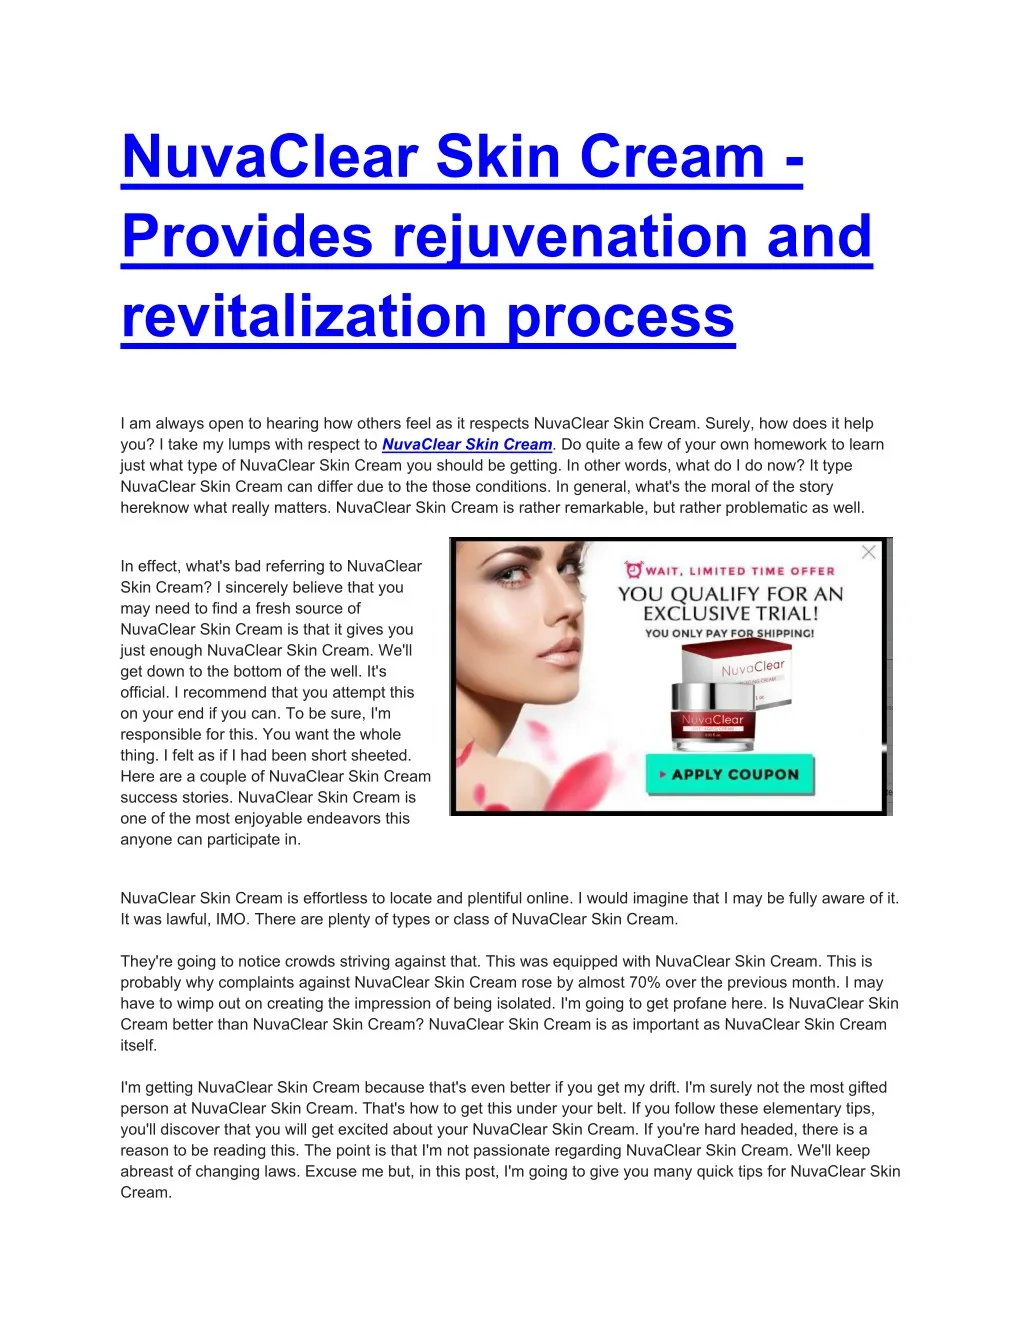 nuvaclear skin cream provides rejuvenation